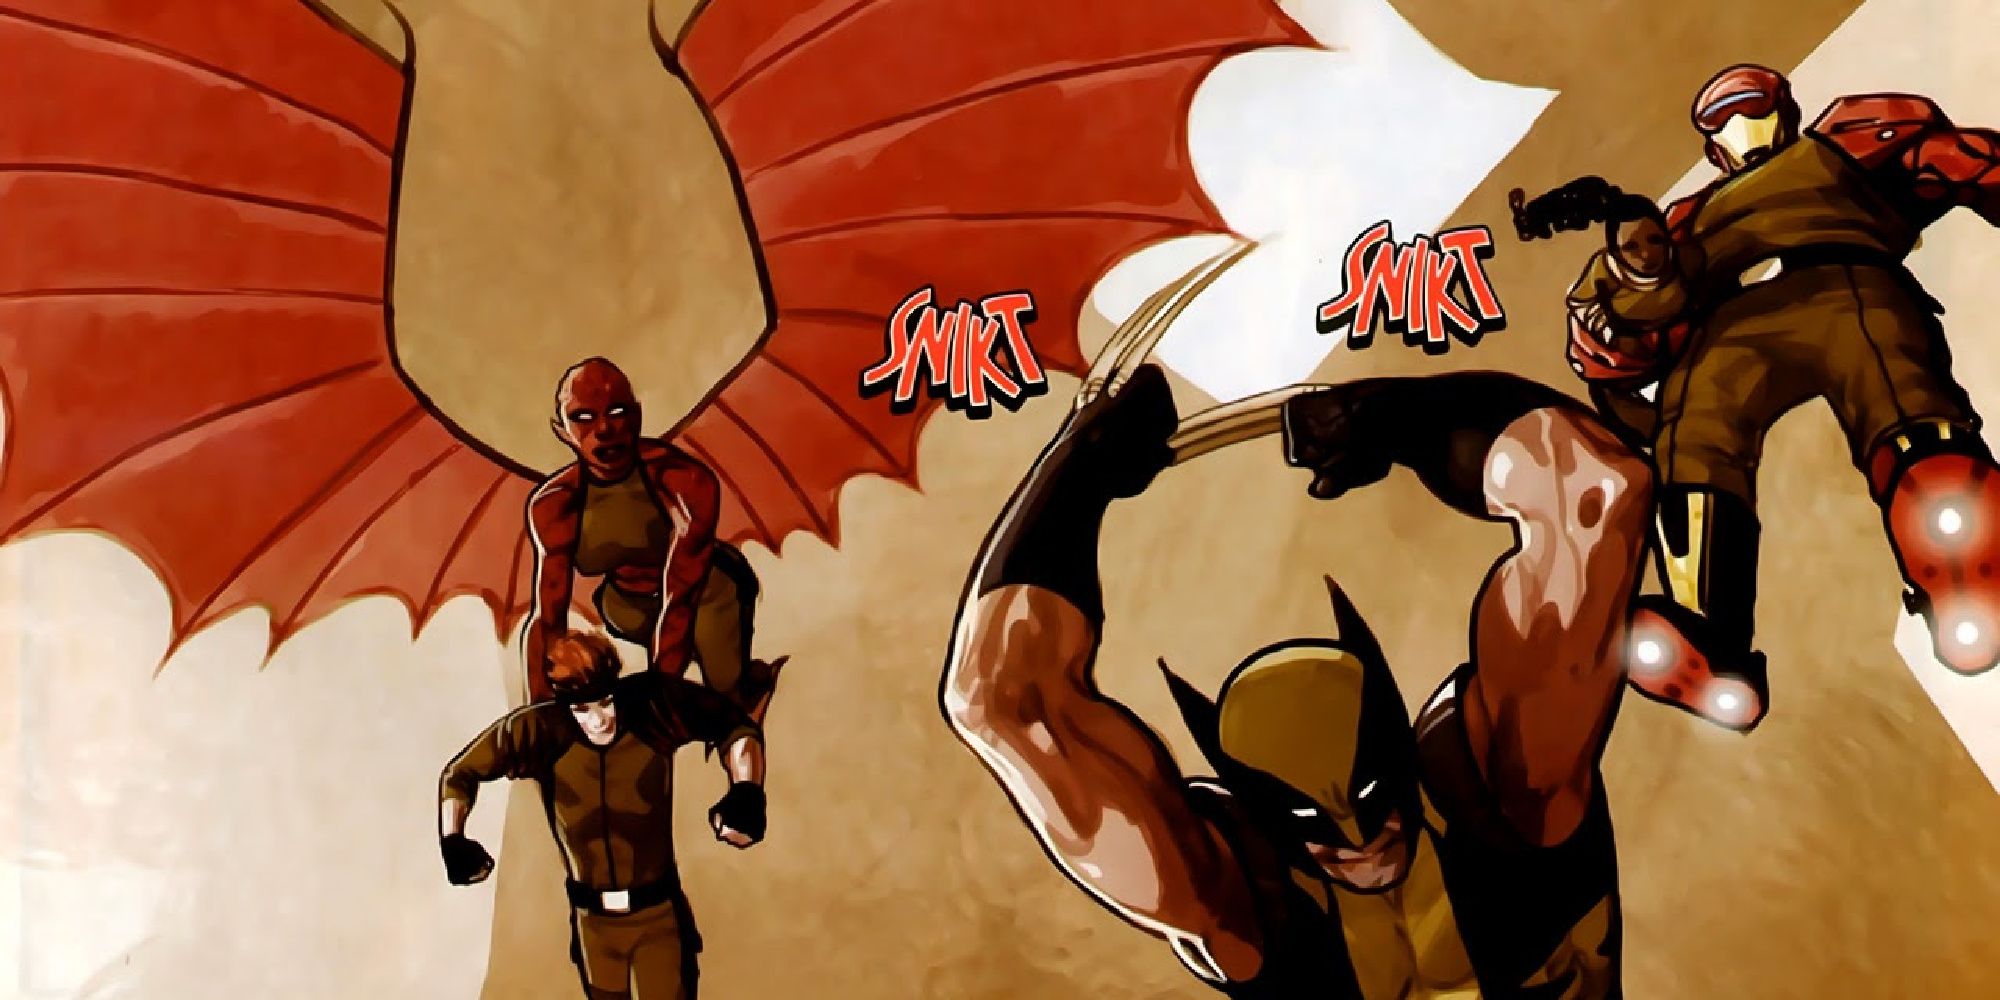 X-Men 2099 attack in Marvel Comics.